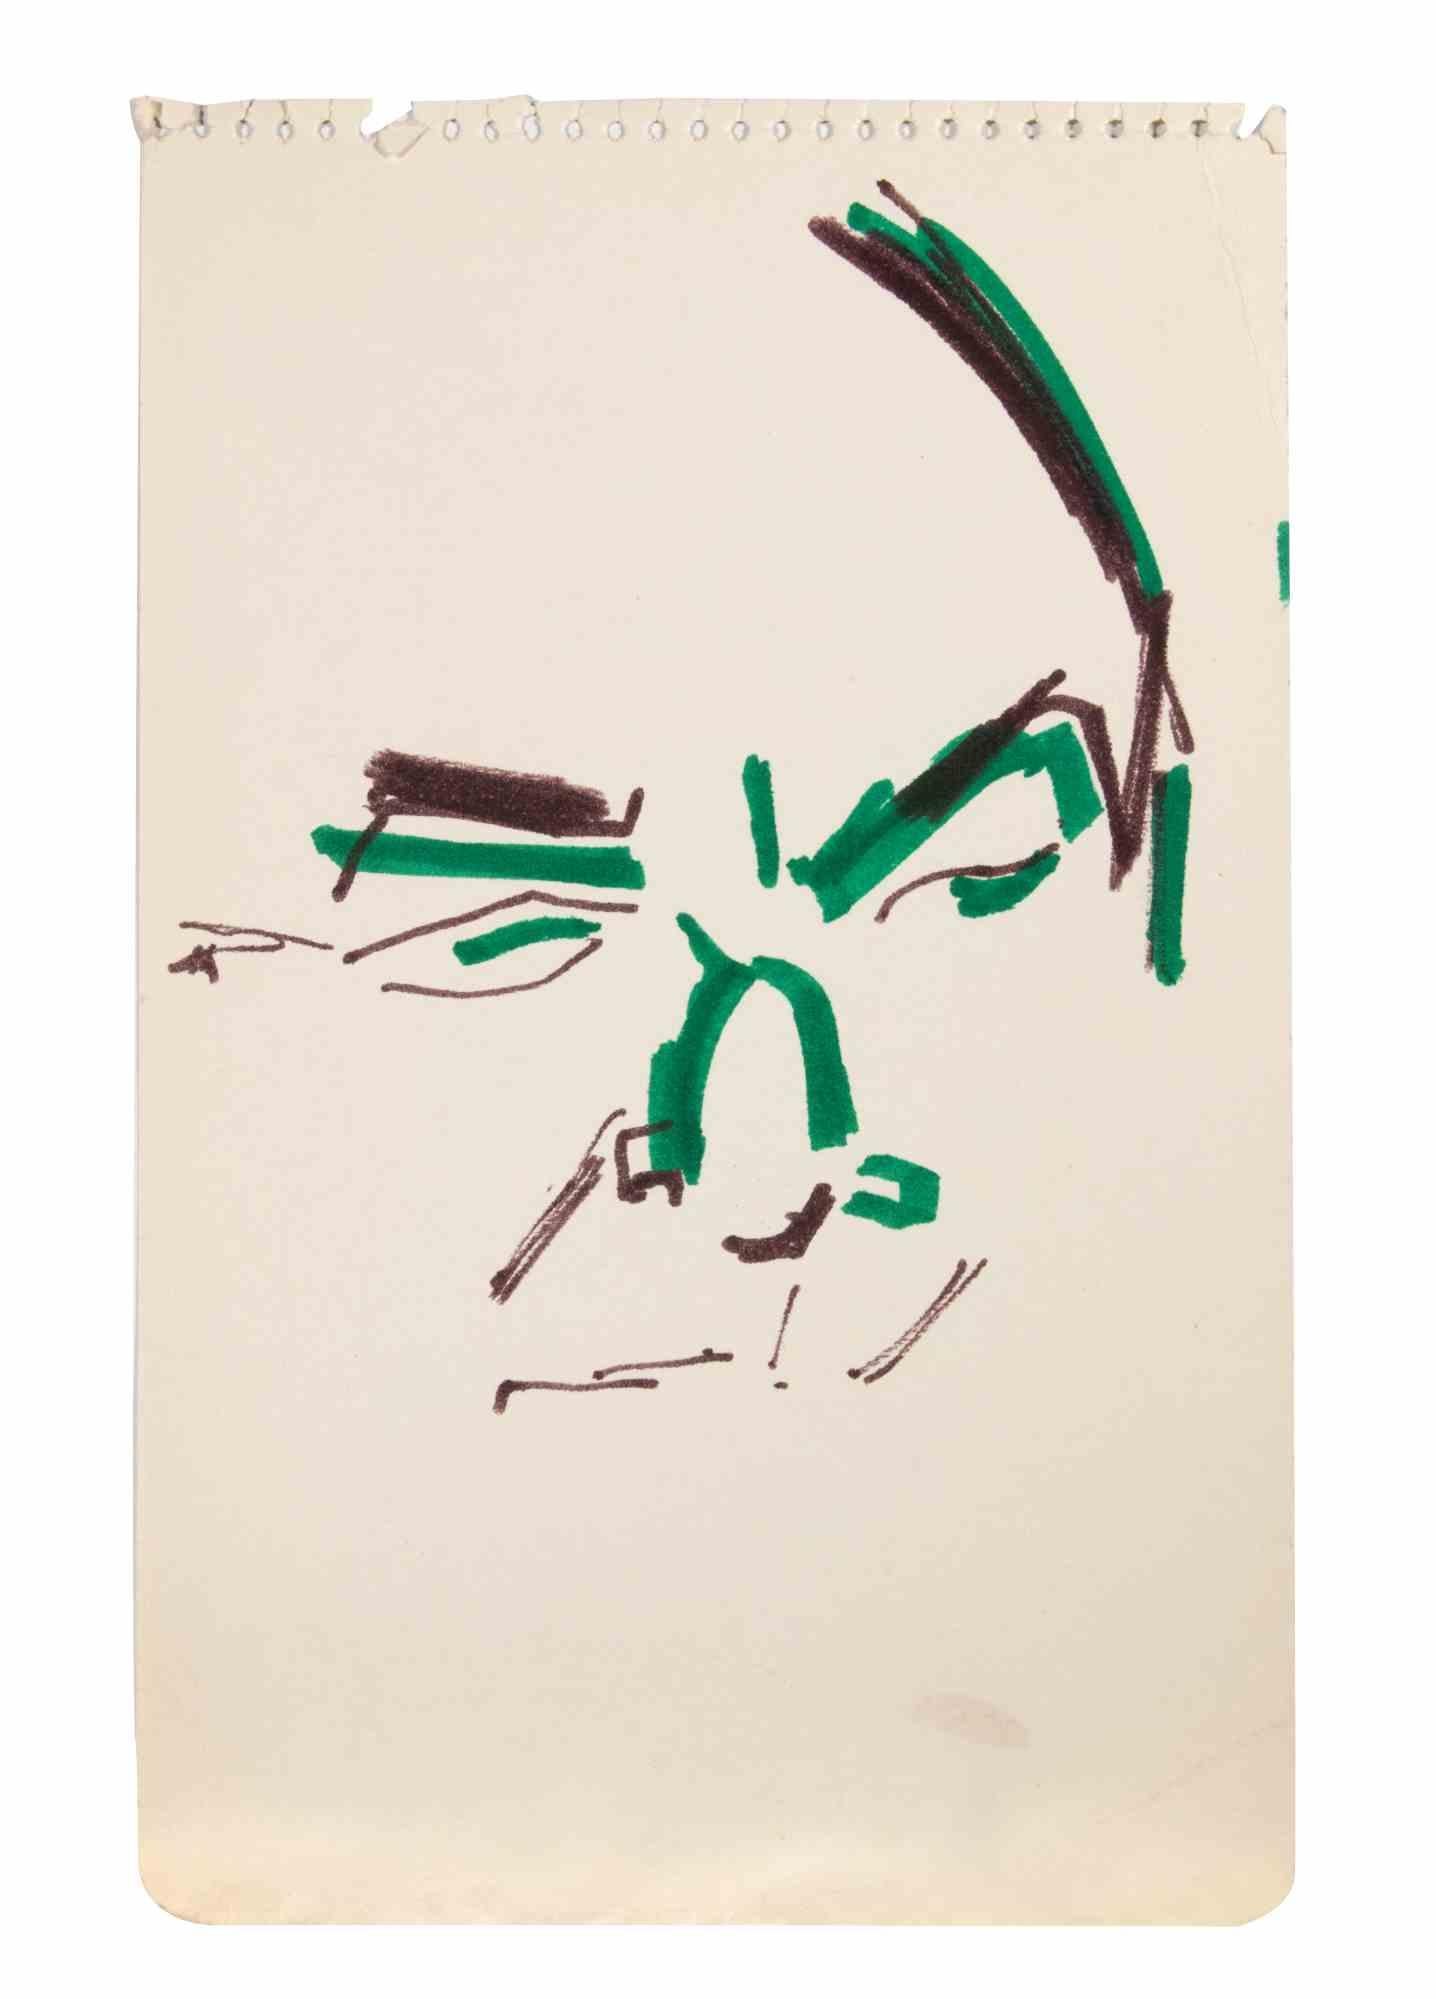 Portrait is a Colour Market Drawing realized by Reynold Arnould  (Le Havre 1919 - Parigi 1980).

Good condition on a sheet of notebook.

No Signature.

Reynold Arnould was born in Le Havre, France in 1919. He studied at l'École des Beaux-Arts de Le